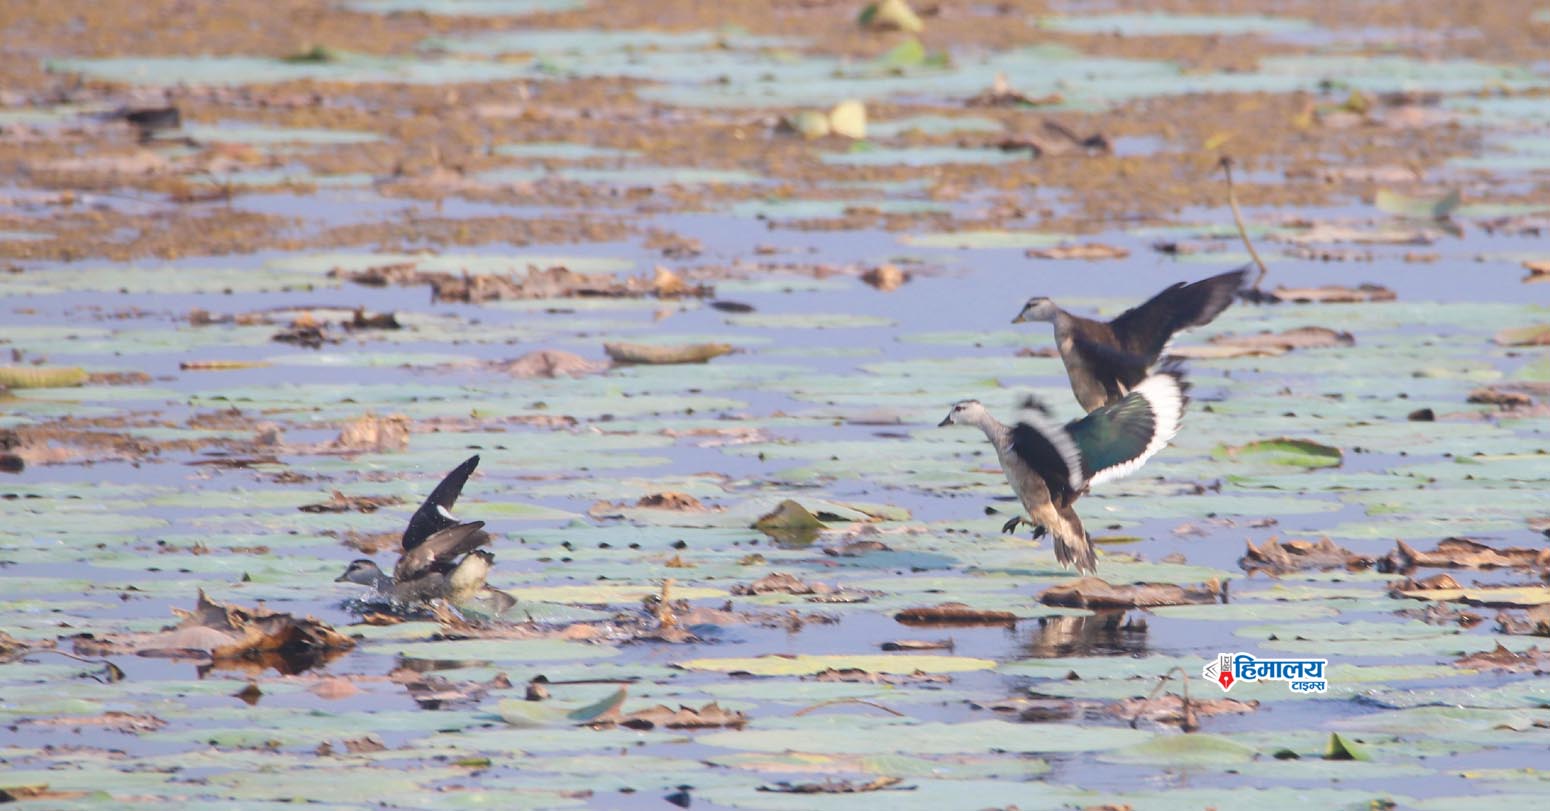 Habitat Loss Causes Sharp Decline Of Birds In Koshi Tappu